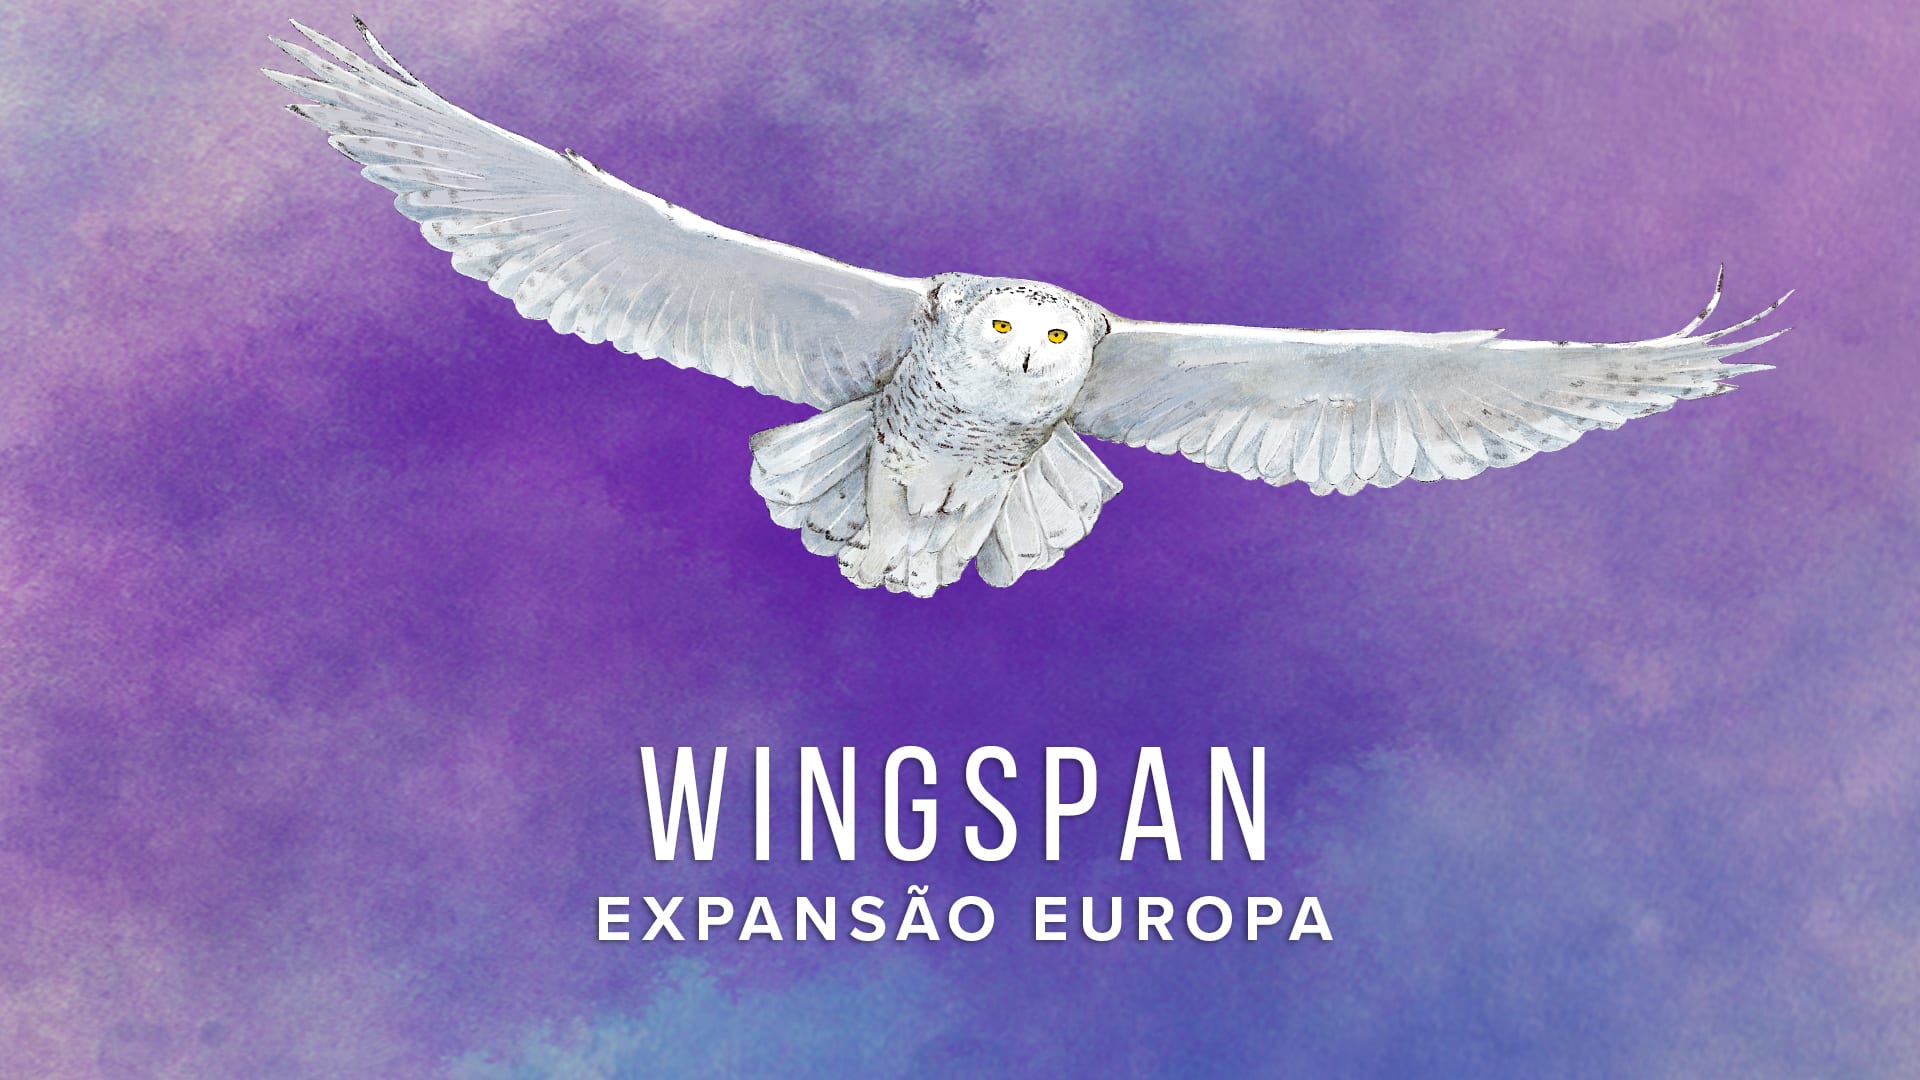 Wingspan: Expansão Europa